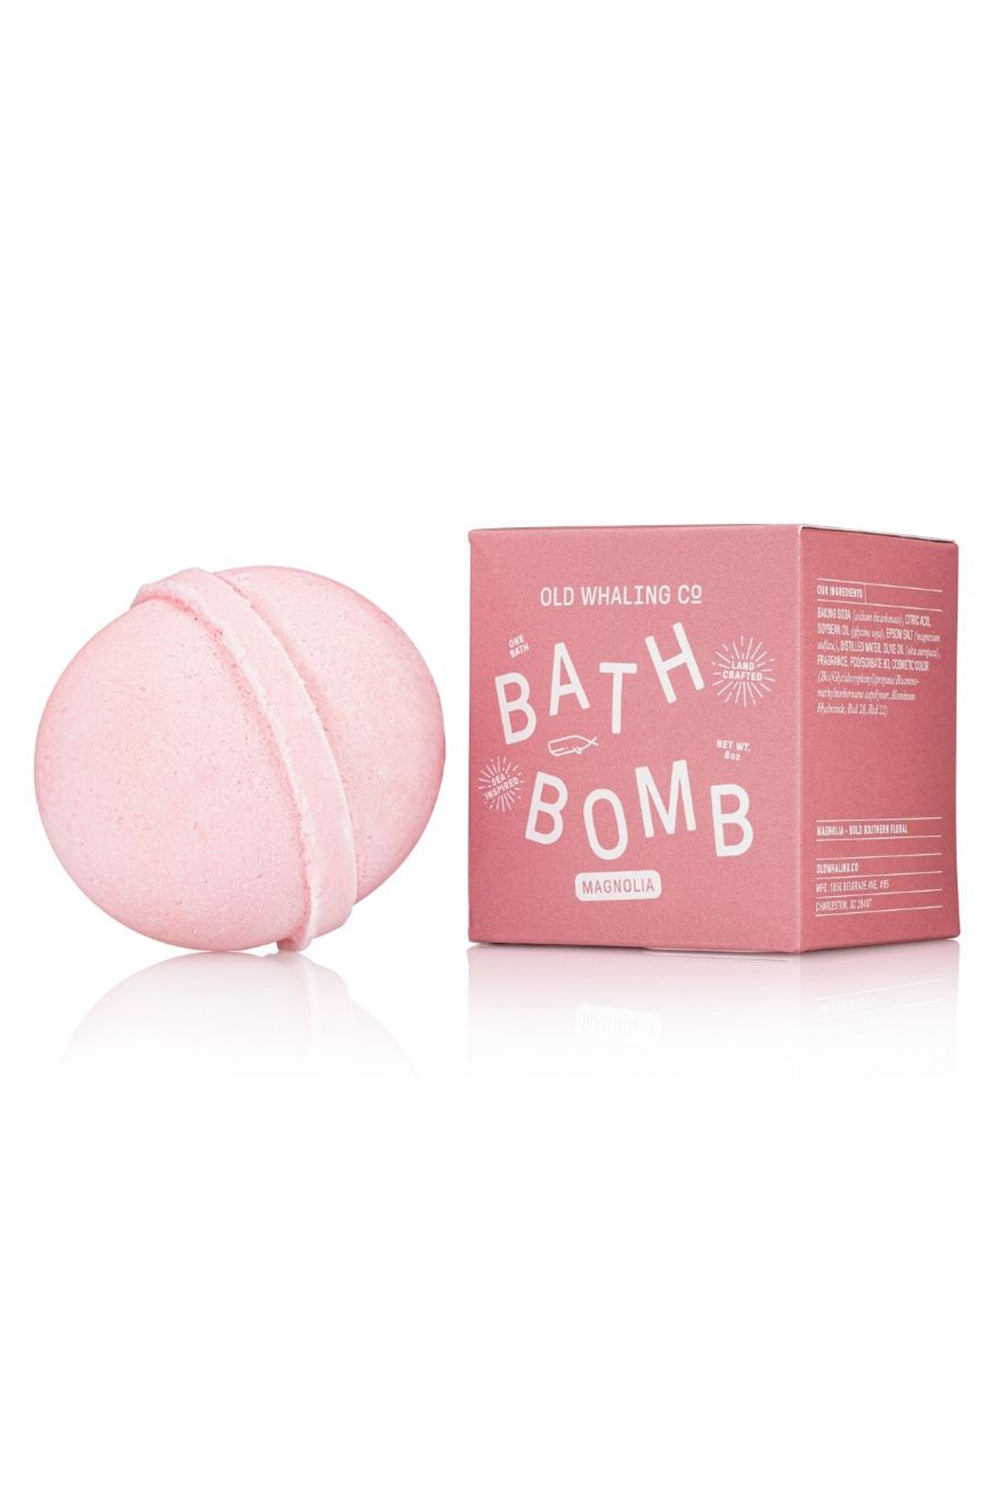 Boxed Bath Bomb - Magnolia